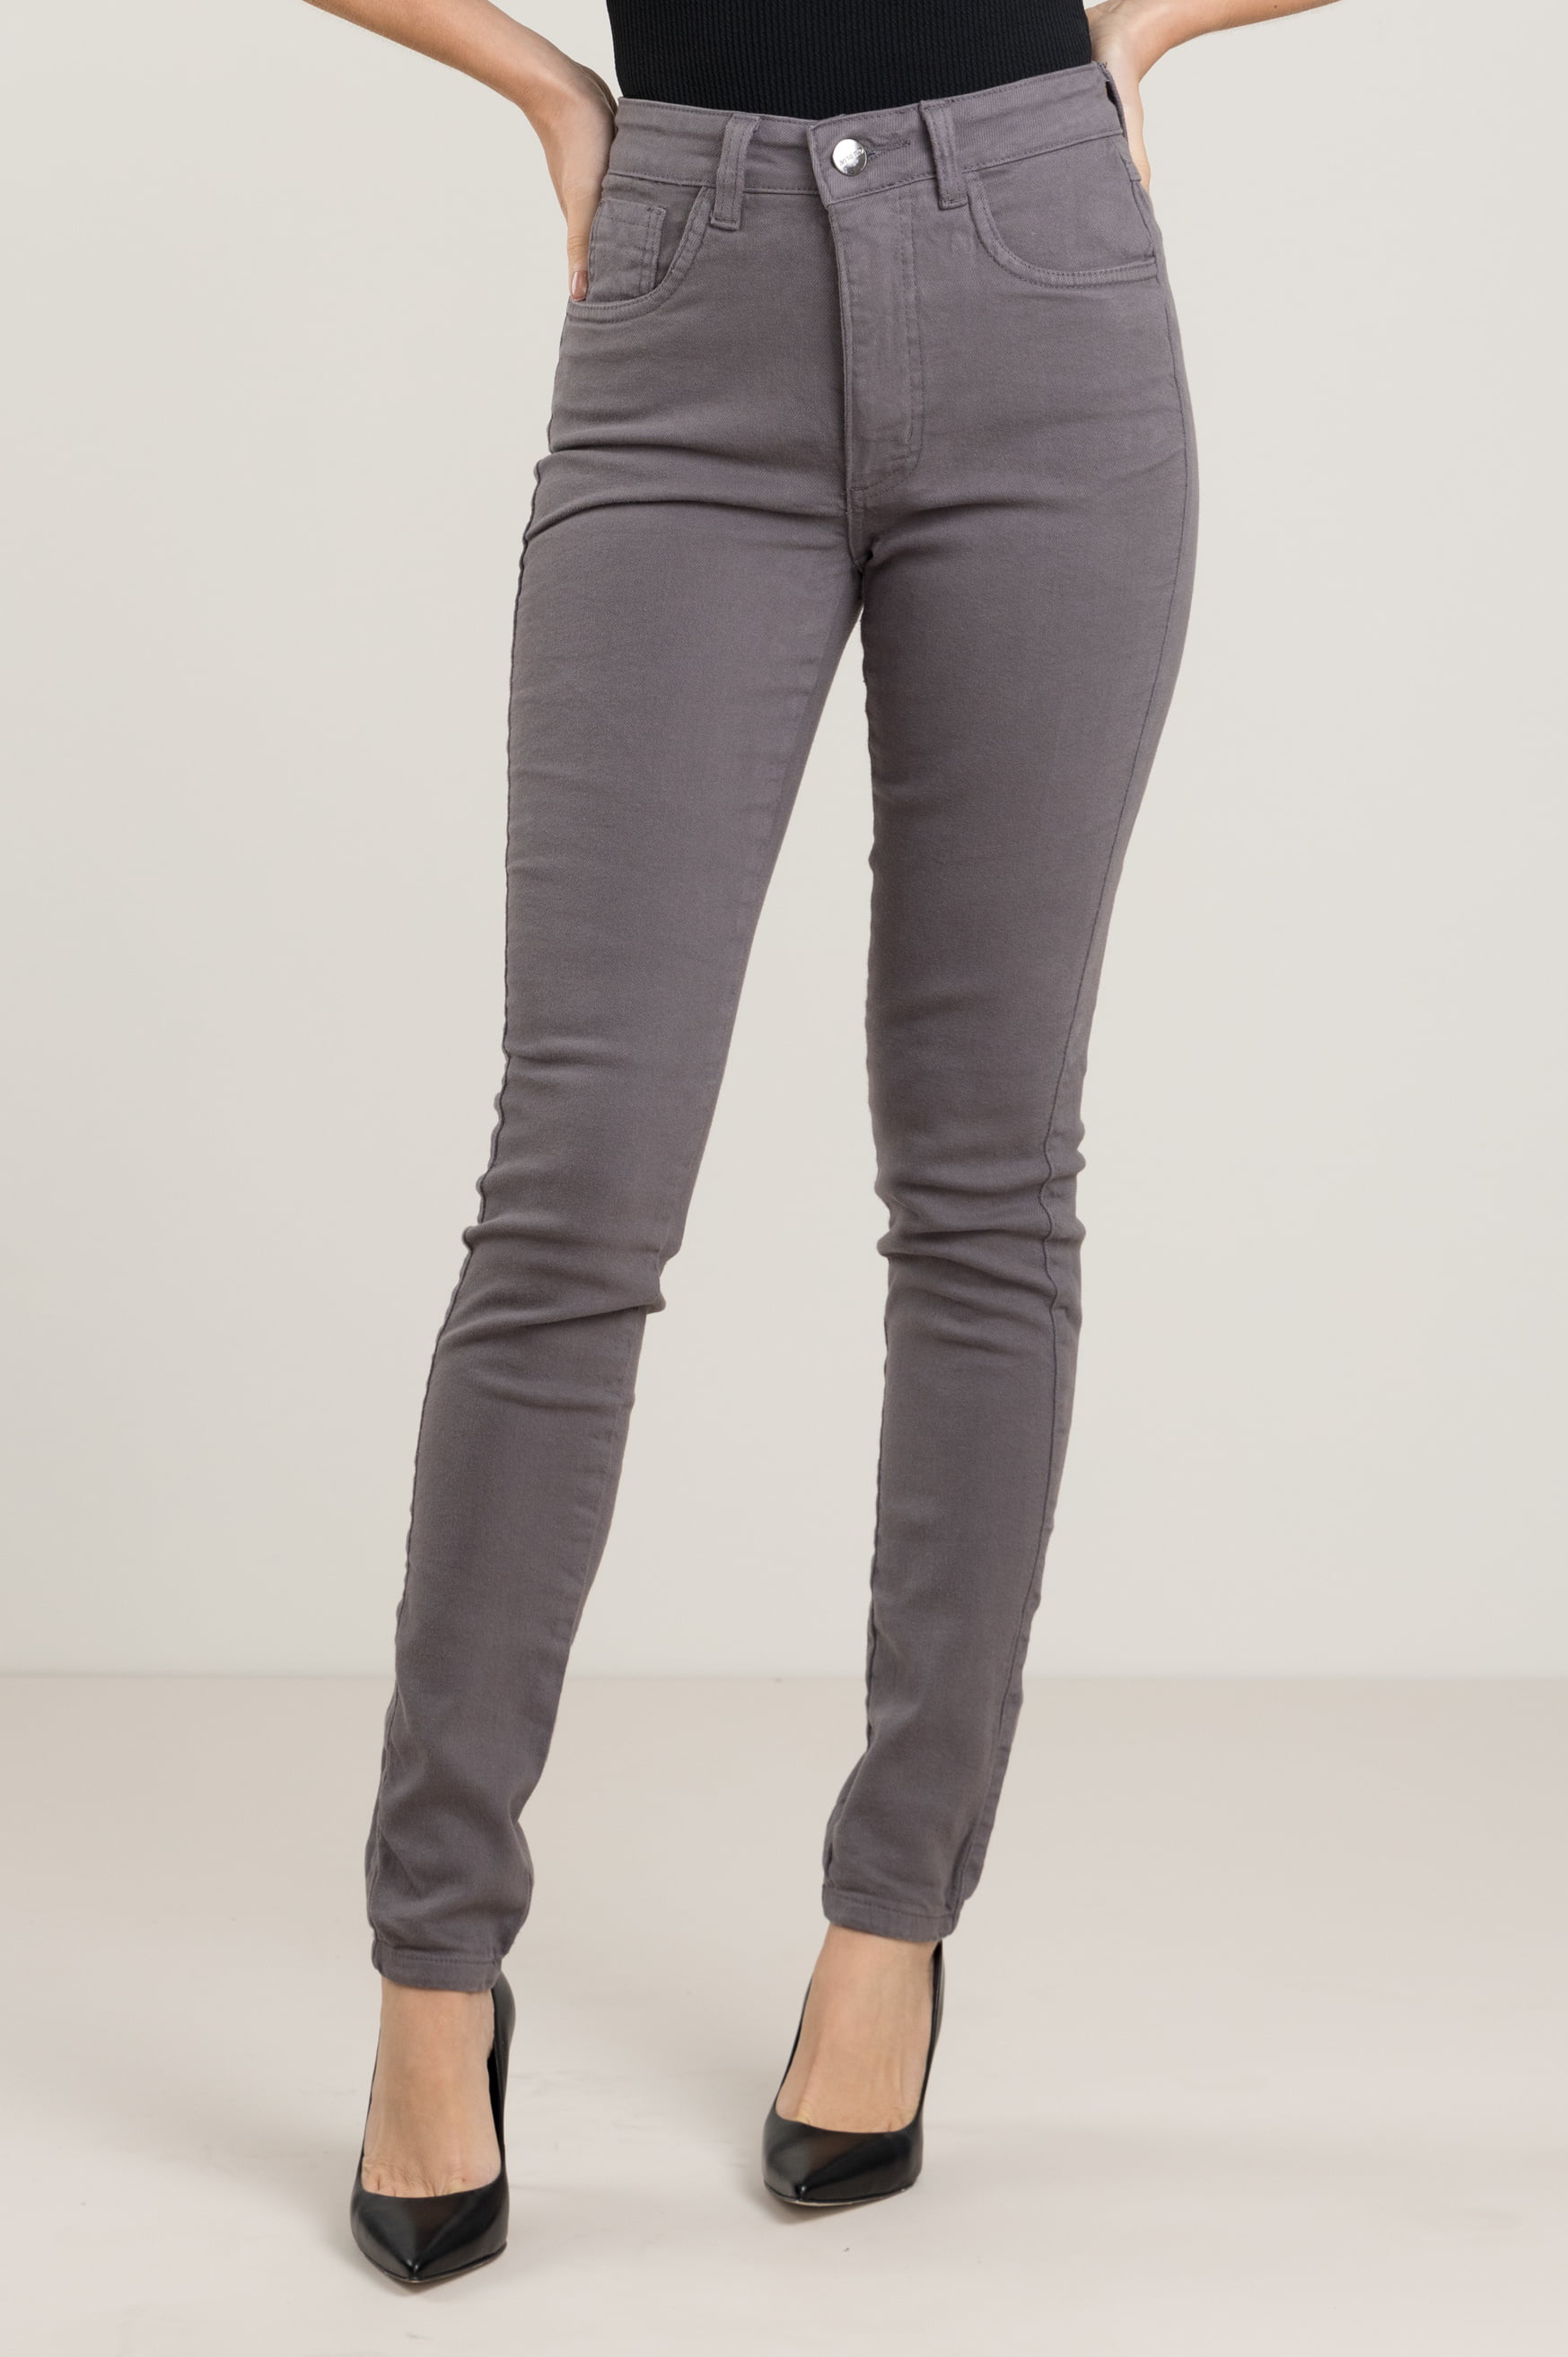 Logami calça jeans feminina cintura midi justa cinza escuro calça jeans  casual feminina